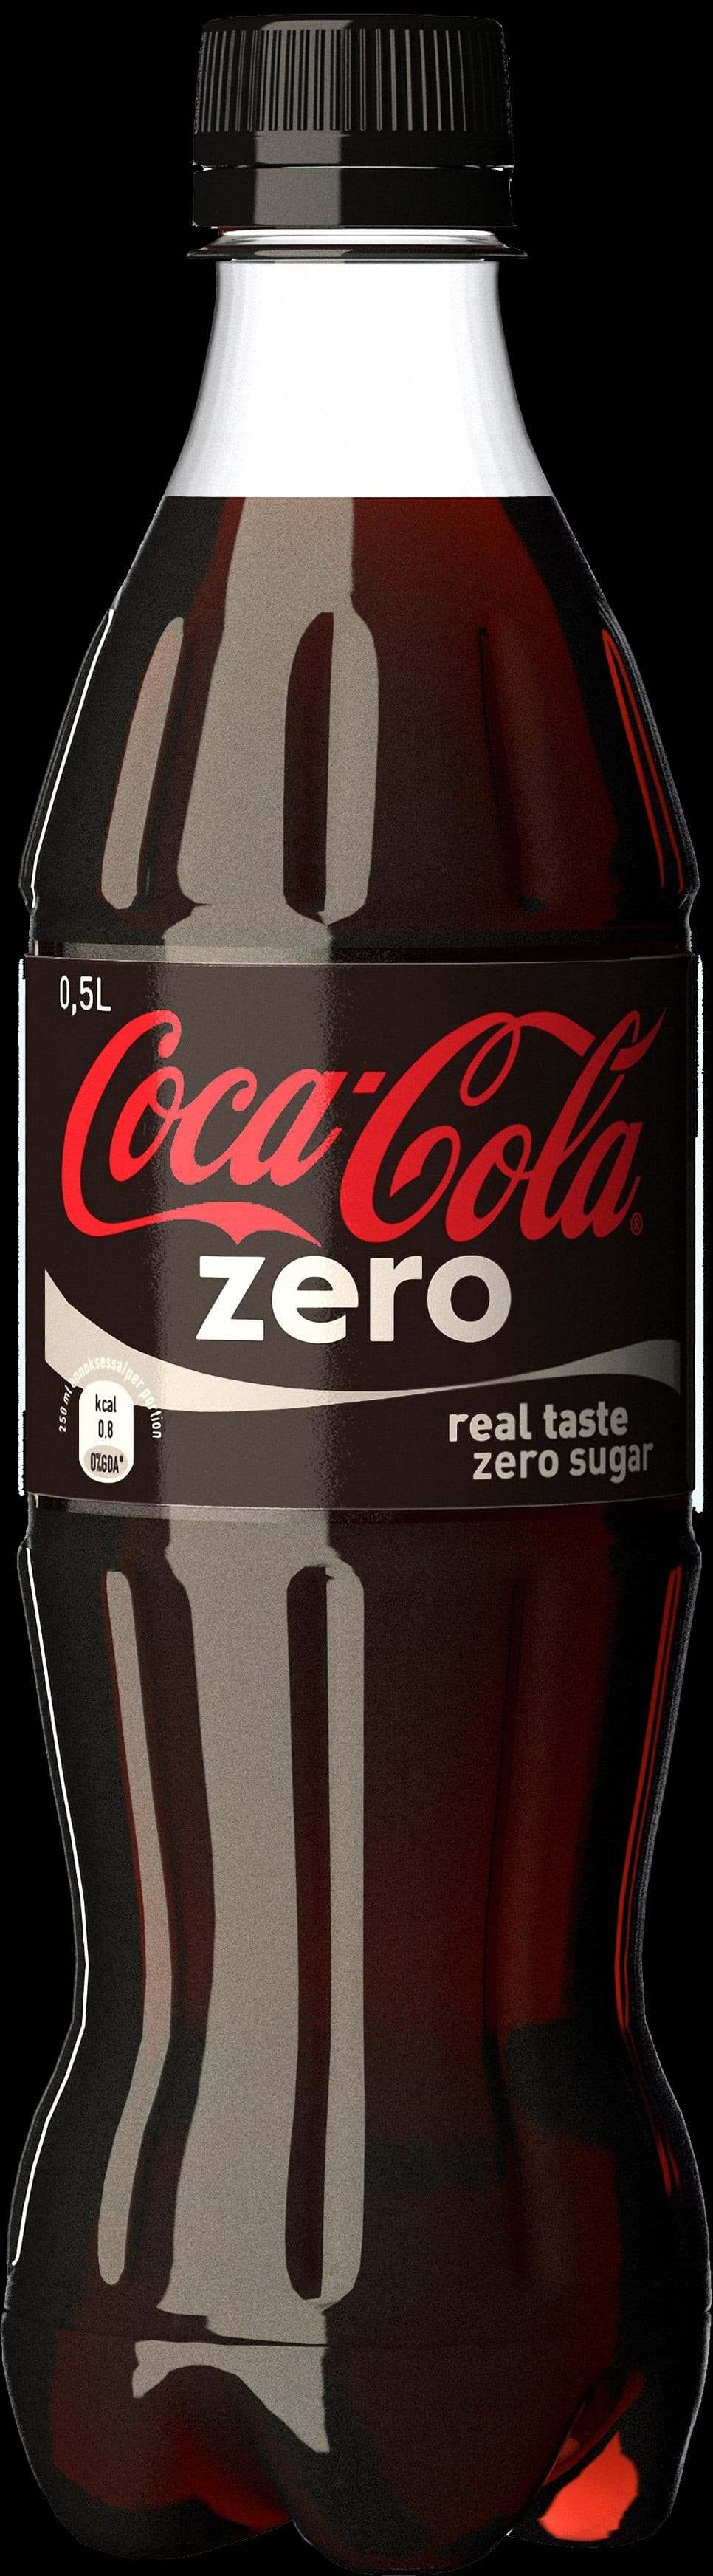 Coca cola Zero 50CL.